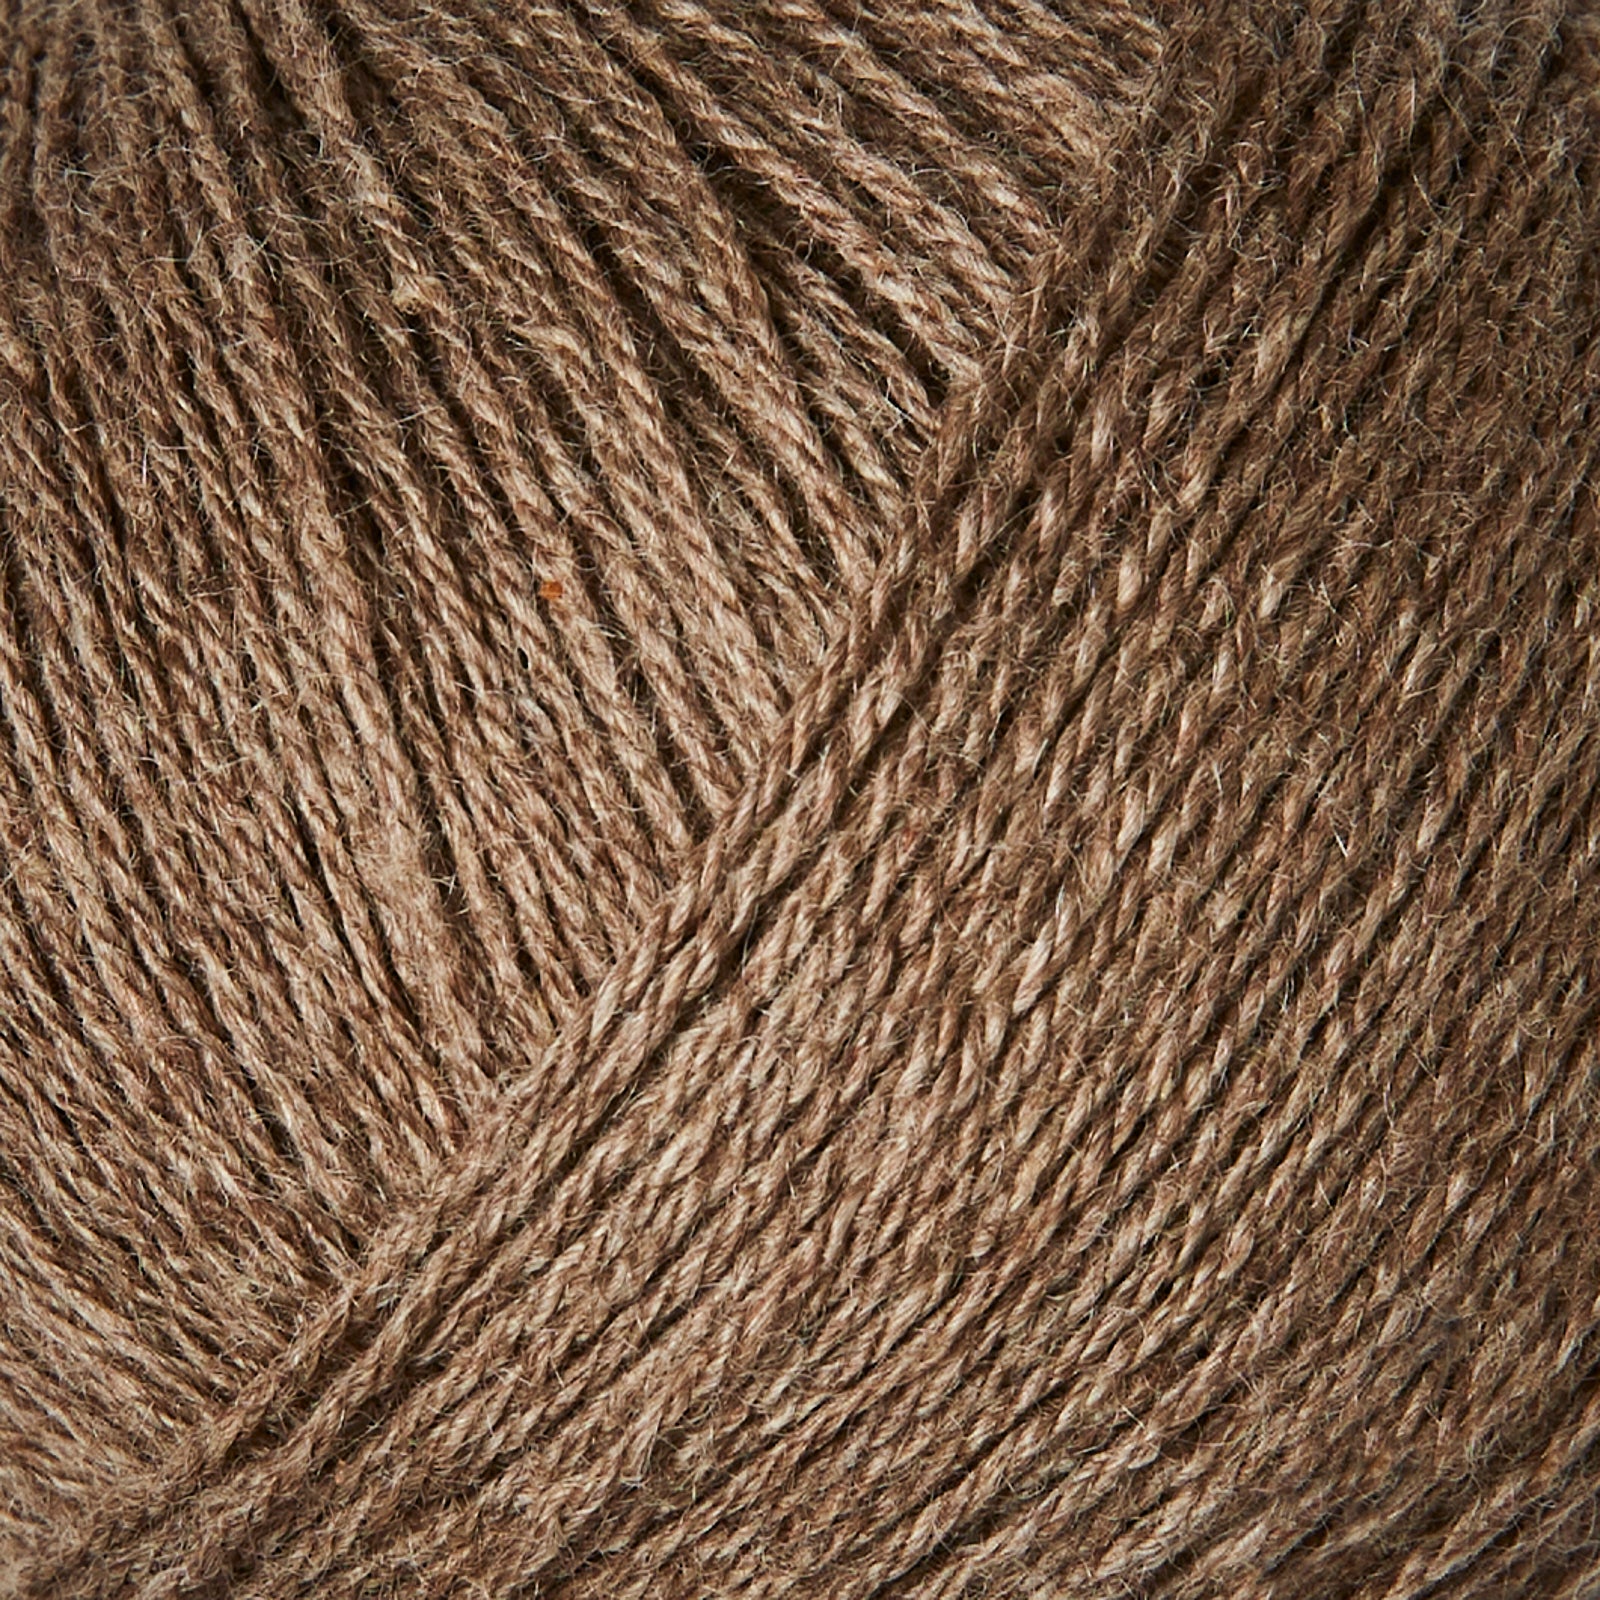 Knitting for Olive Compatible Cashmere - Bark